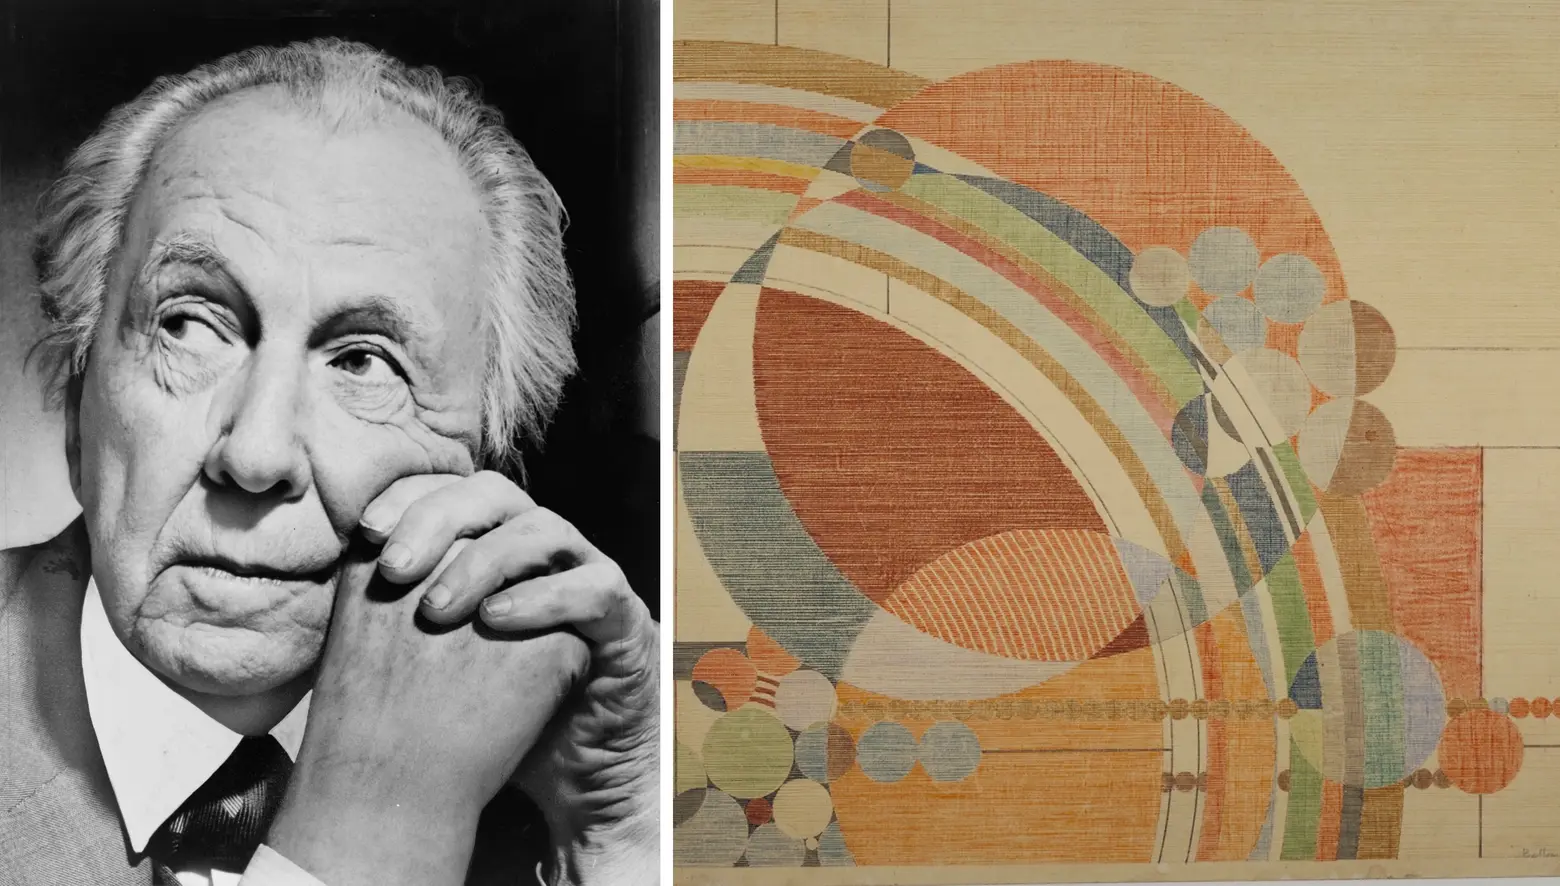 MoMA Announces Major Frank Lloyd Wright Retrospective in 2017 to Mark His 150th Birthday